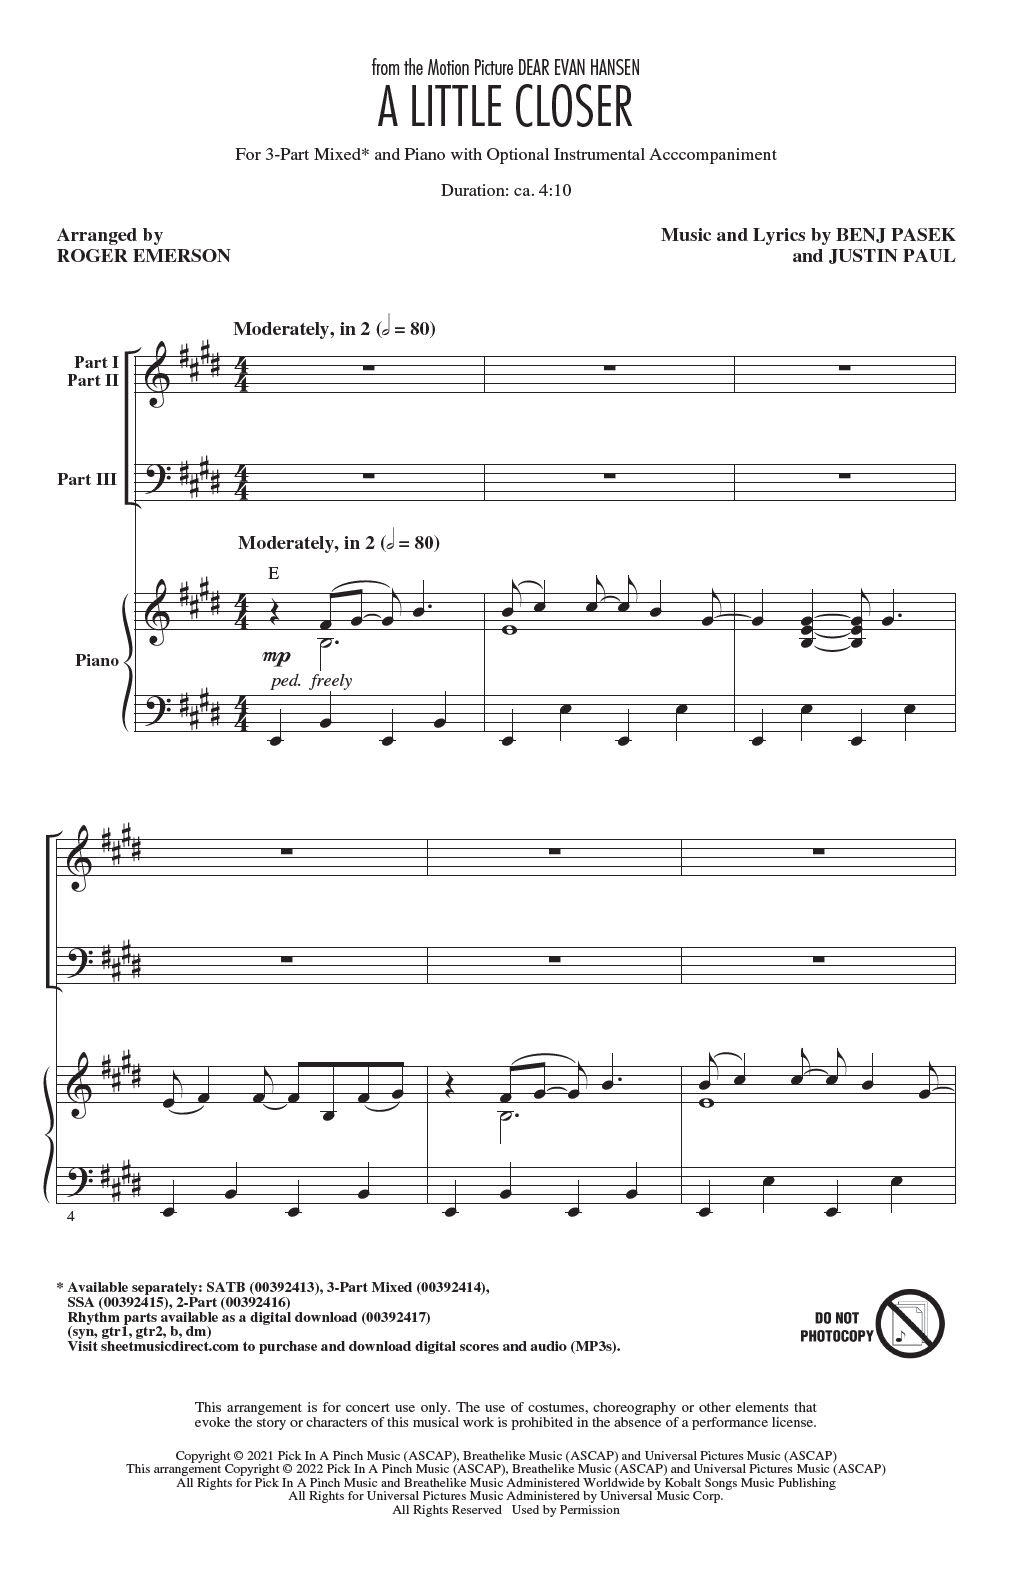 Pasek & Paul A Little Closer (from Dear Evan Hansen) (arr. Roger Emerson) Sheet Music Notes & Chords for SSA Choir - Download or Print PDF